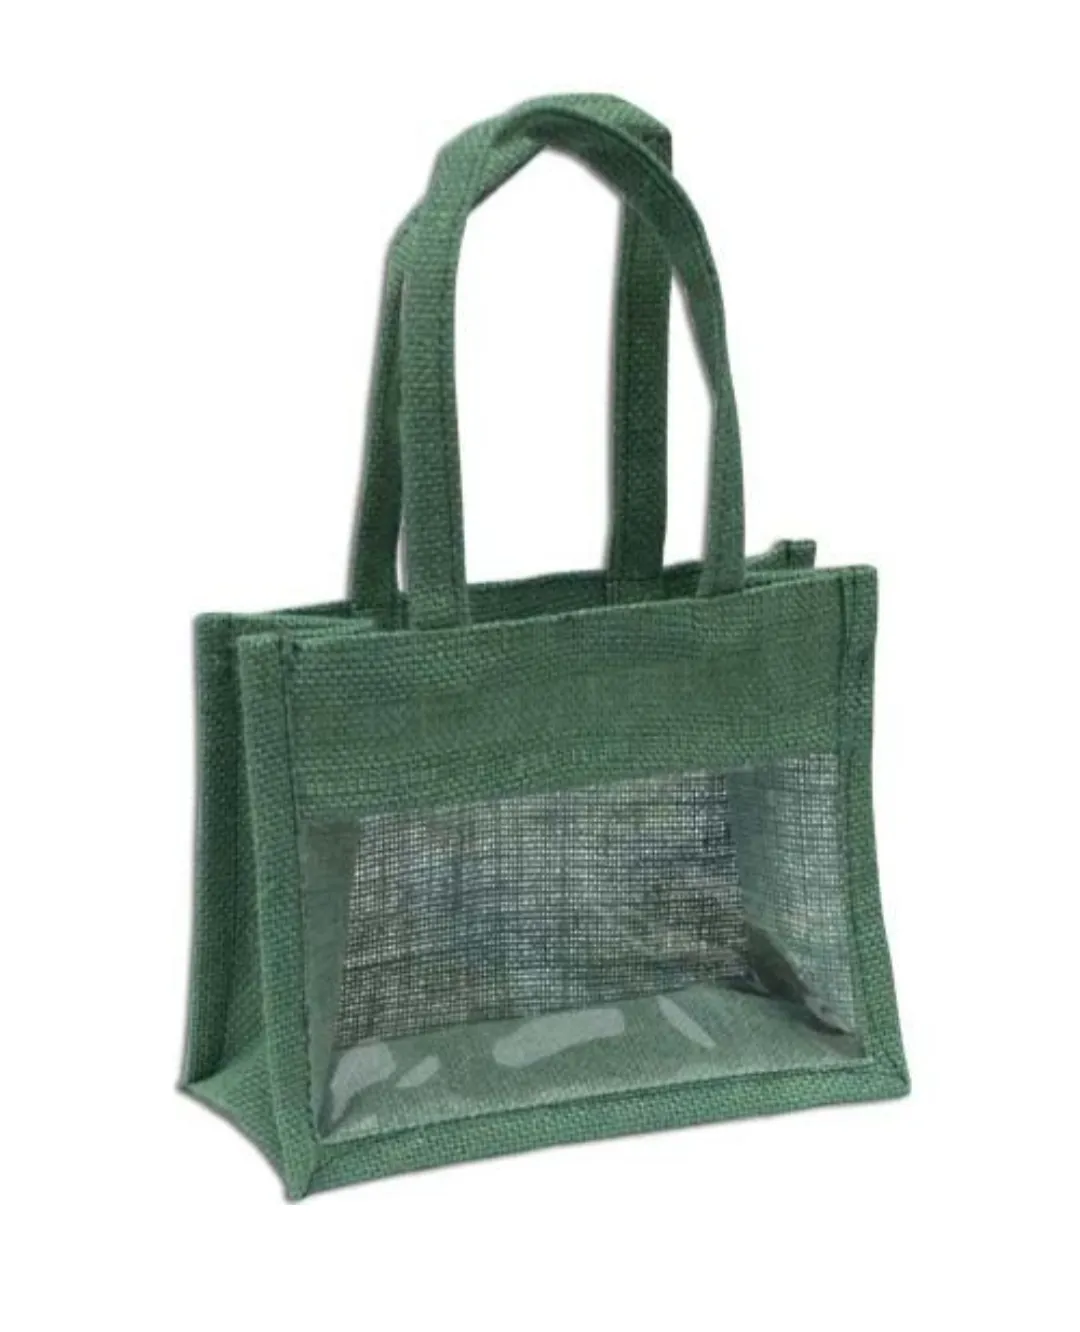 transparent pvc jute wine bag/bottle gift bag promotional jute bag/Cotton Cord Handle With PVC Window See Through Small Jute bag